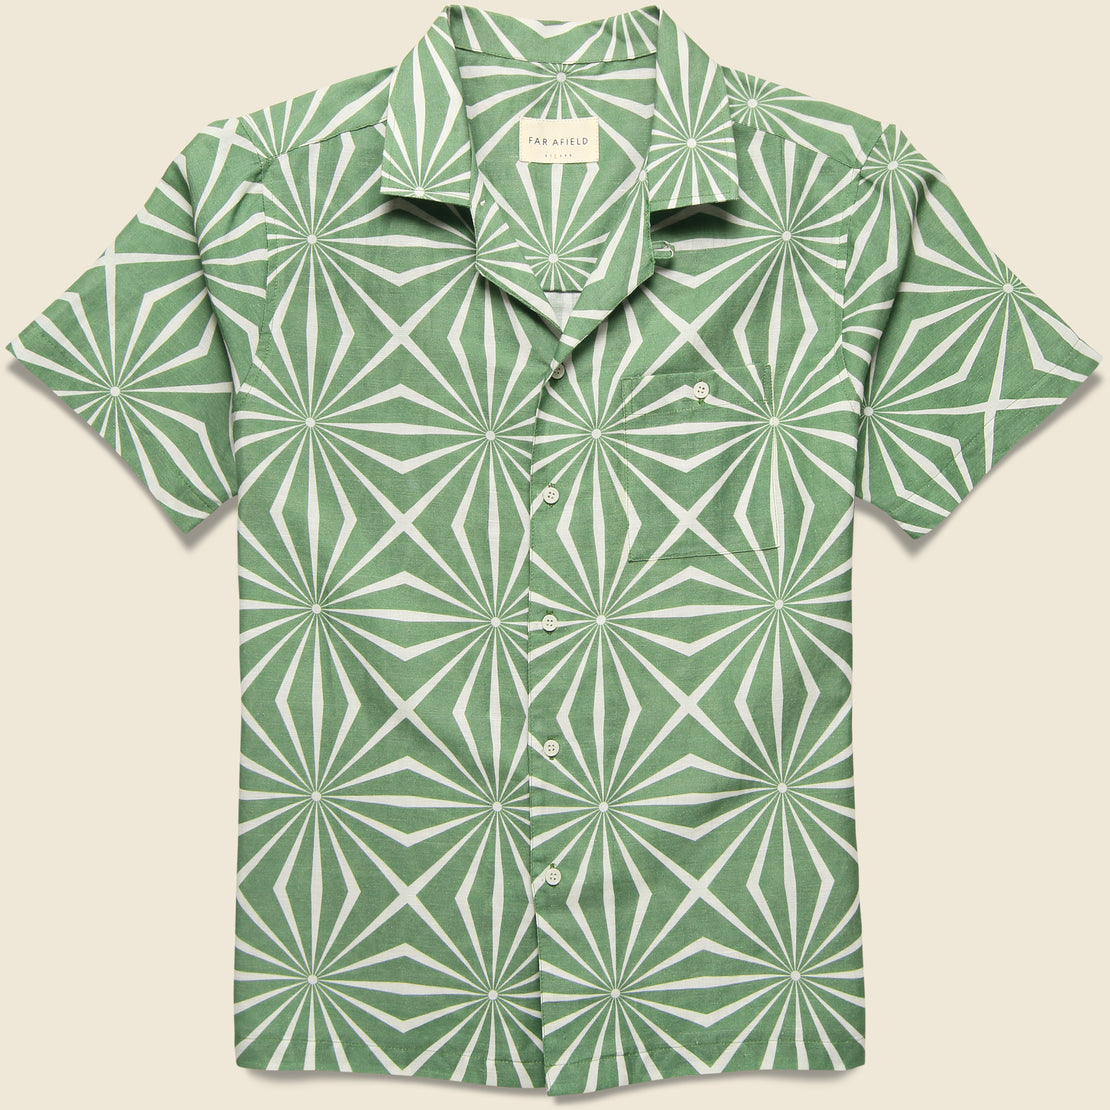 Far Afield Selleck Shirt - Turf Green